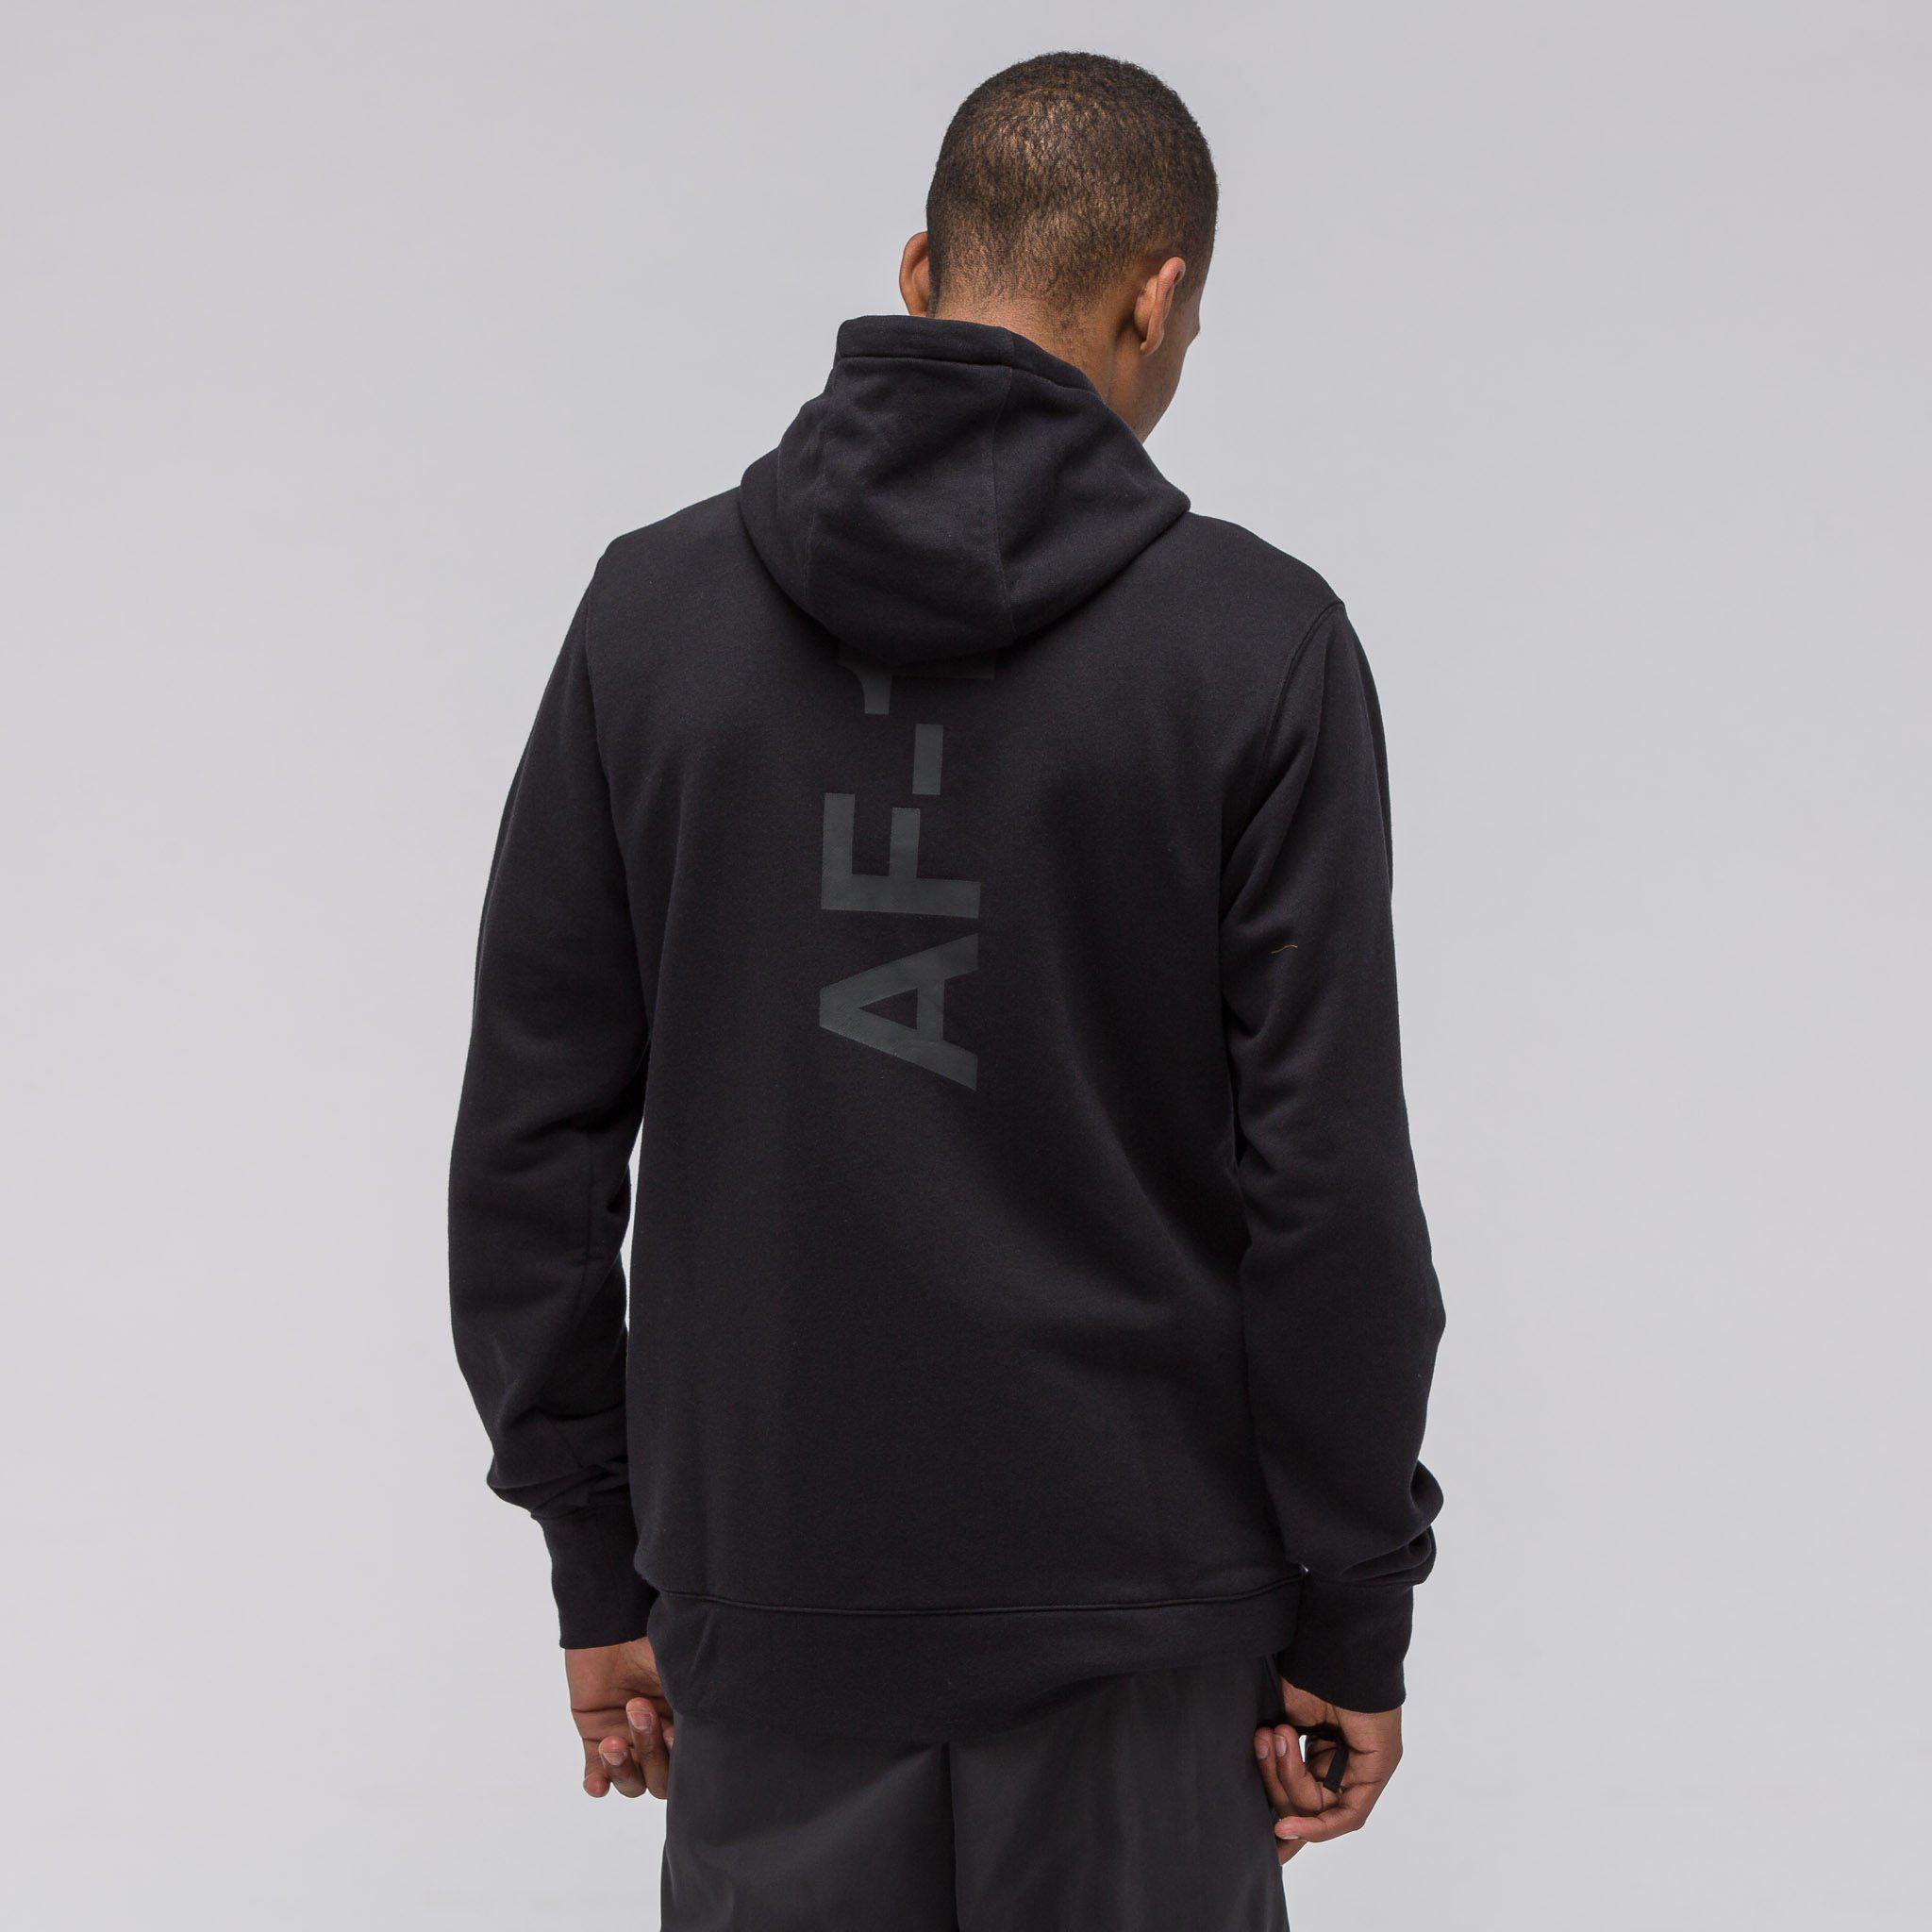 Nike Sportswear Air Force 1 Fullzip Fleece Hoodie In Black for Men - Lyst